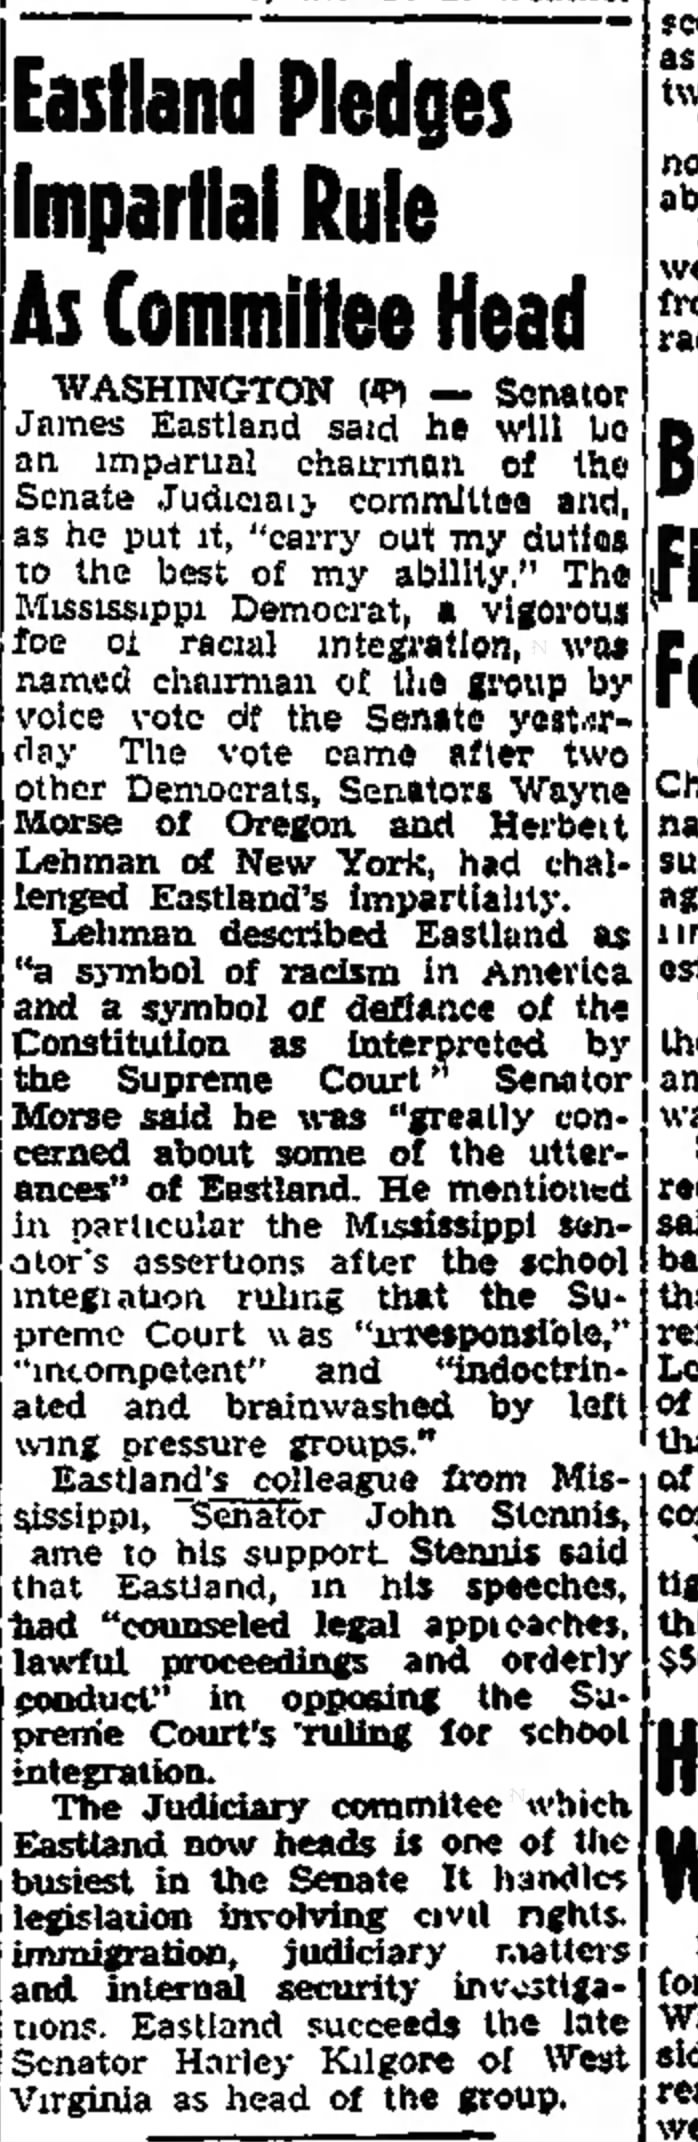 Wayne Morse opposes Eastland for Judiciary Chairman 1956